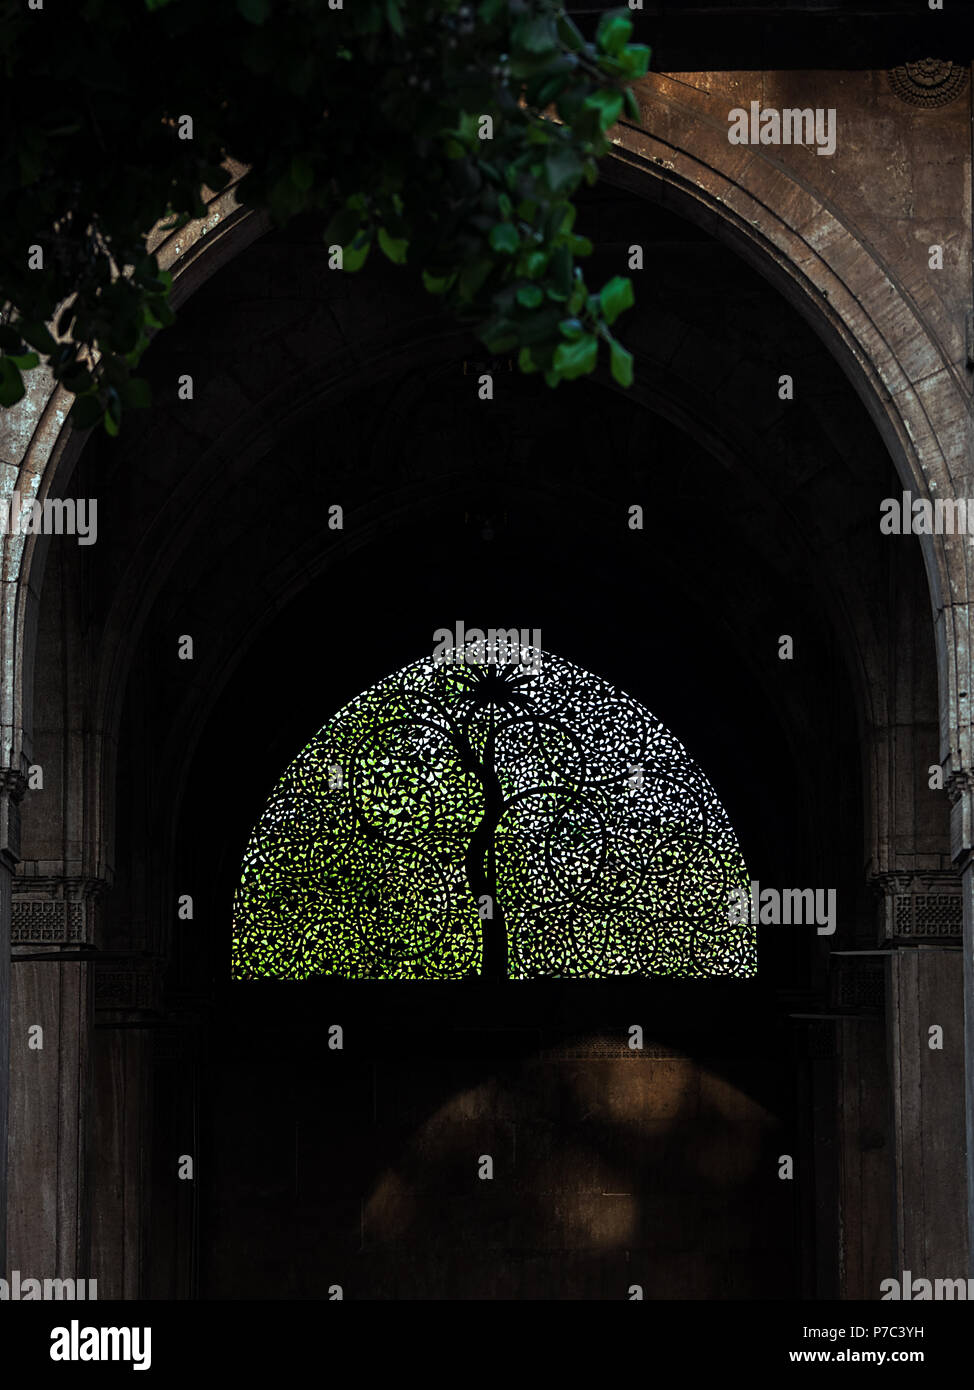 Famous Sidi Saiyyed mosque jali - stone latticework windows in Ahmedabad - heritage city of Gujarat, India with tree branches adding to the frame Stock Photo